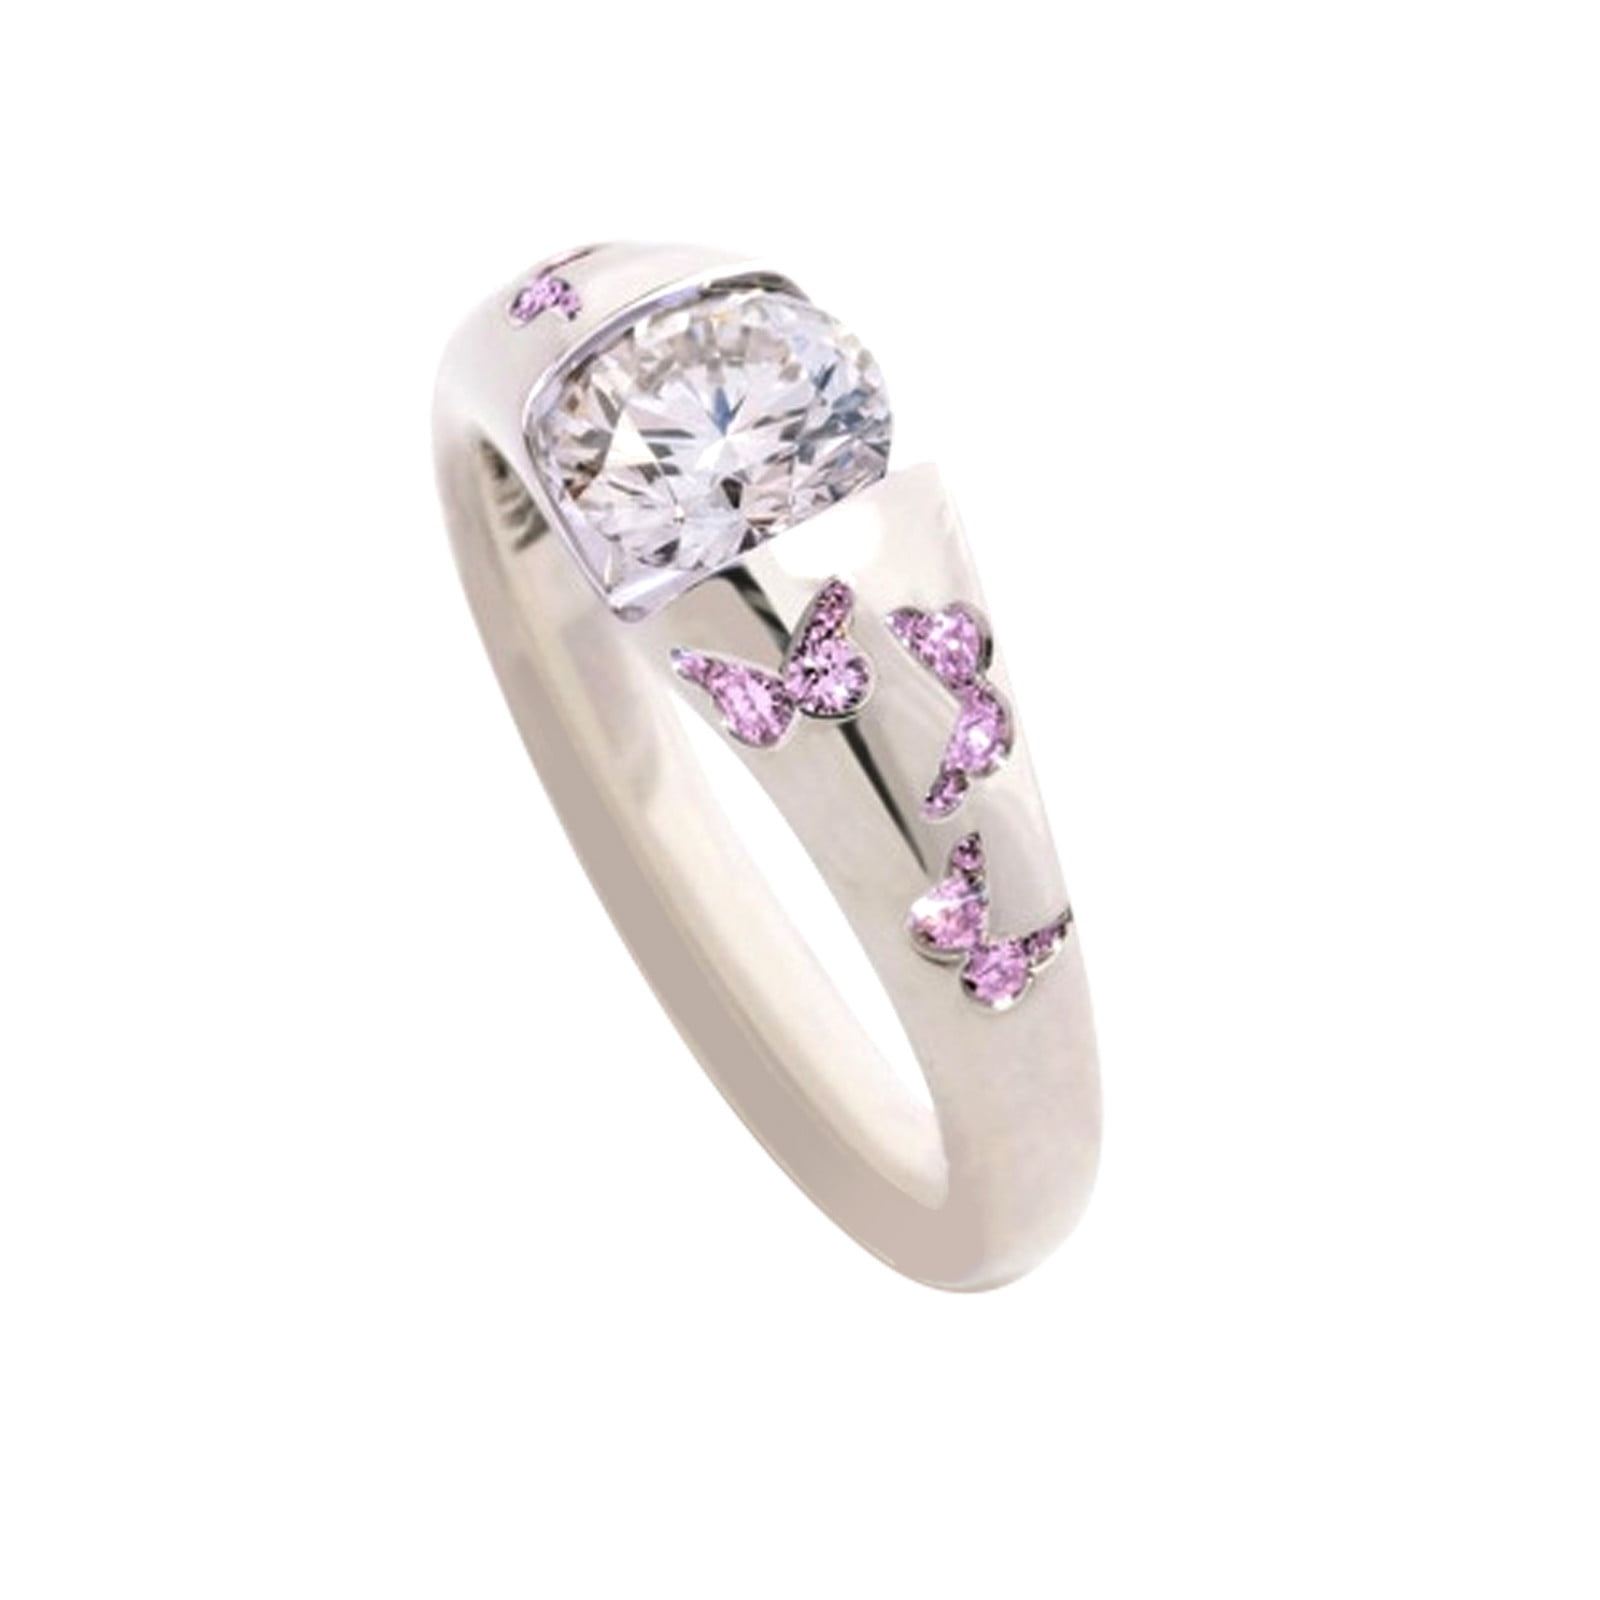 Personality Butterfly purple Gemstone Silver Wedding Jewelry Ring Size 6-10